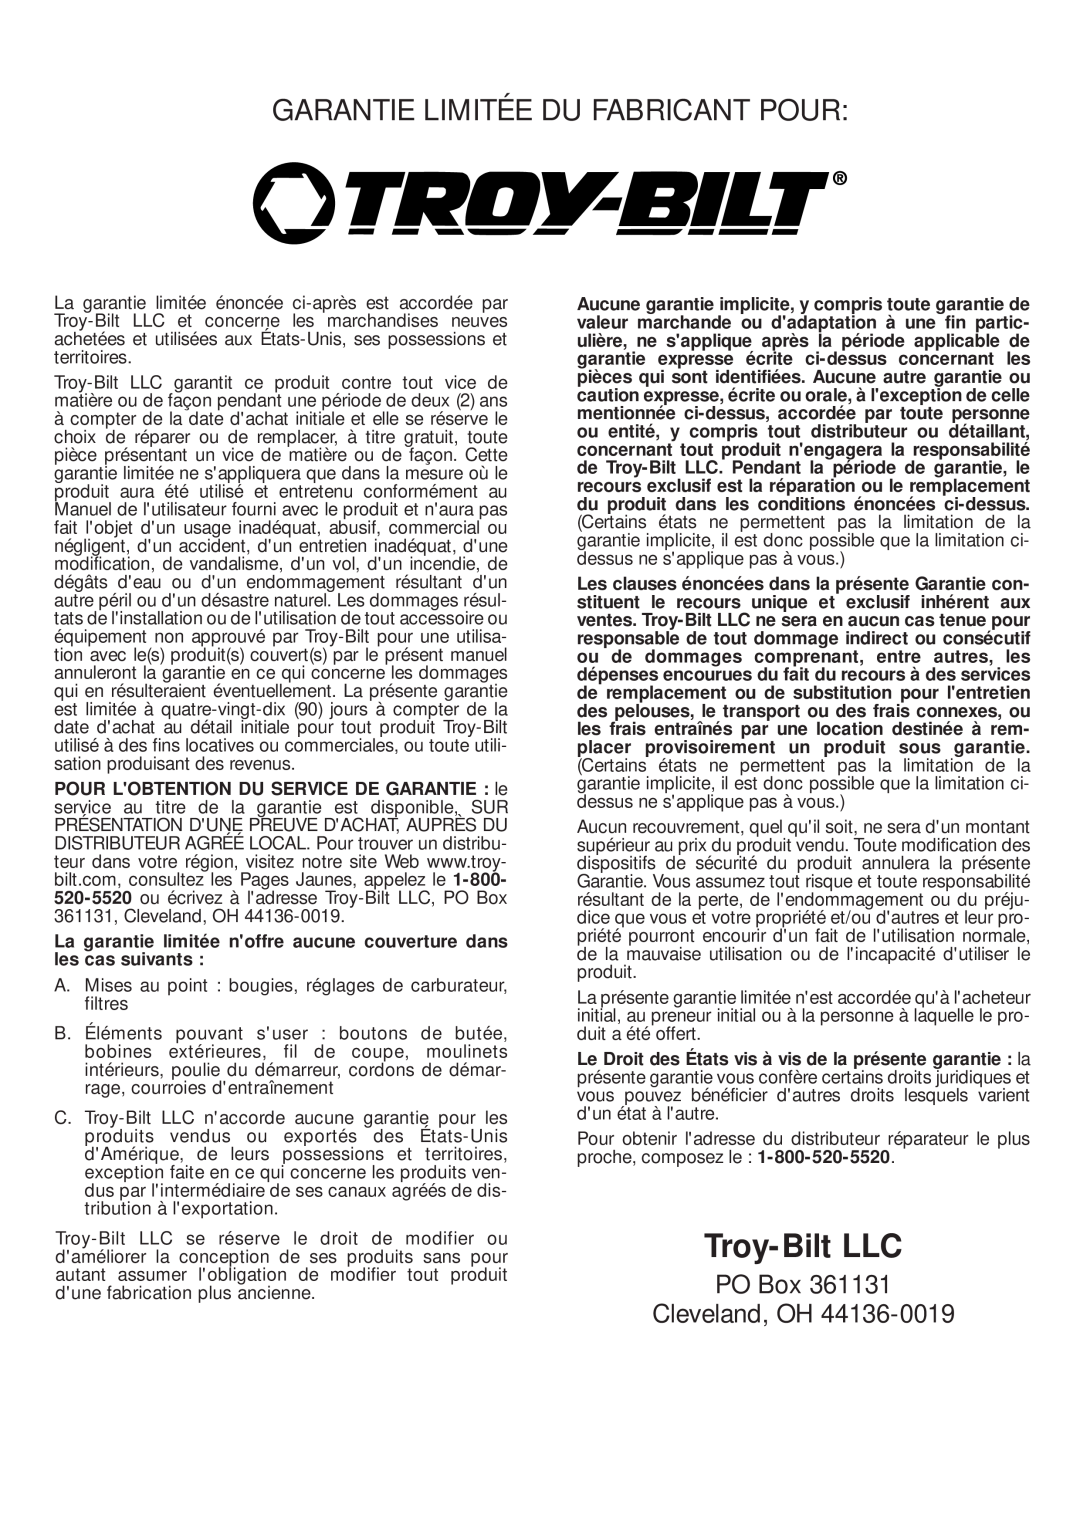 MTD TBPS manual PO Box Cleveland, OH, Troy-BiltLLC, Garantie Limitée Du Fabricant Pour 